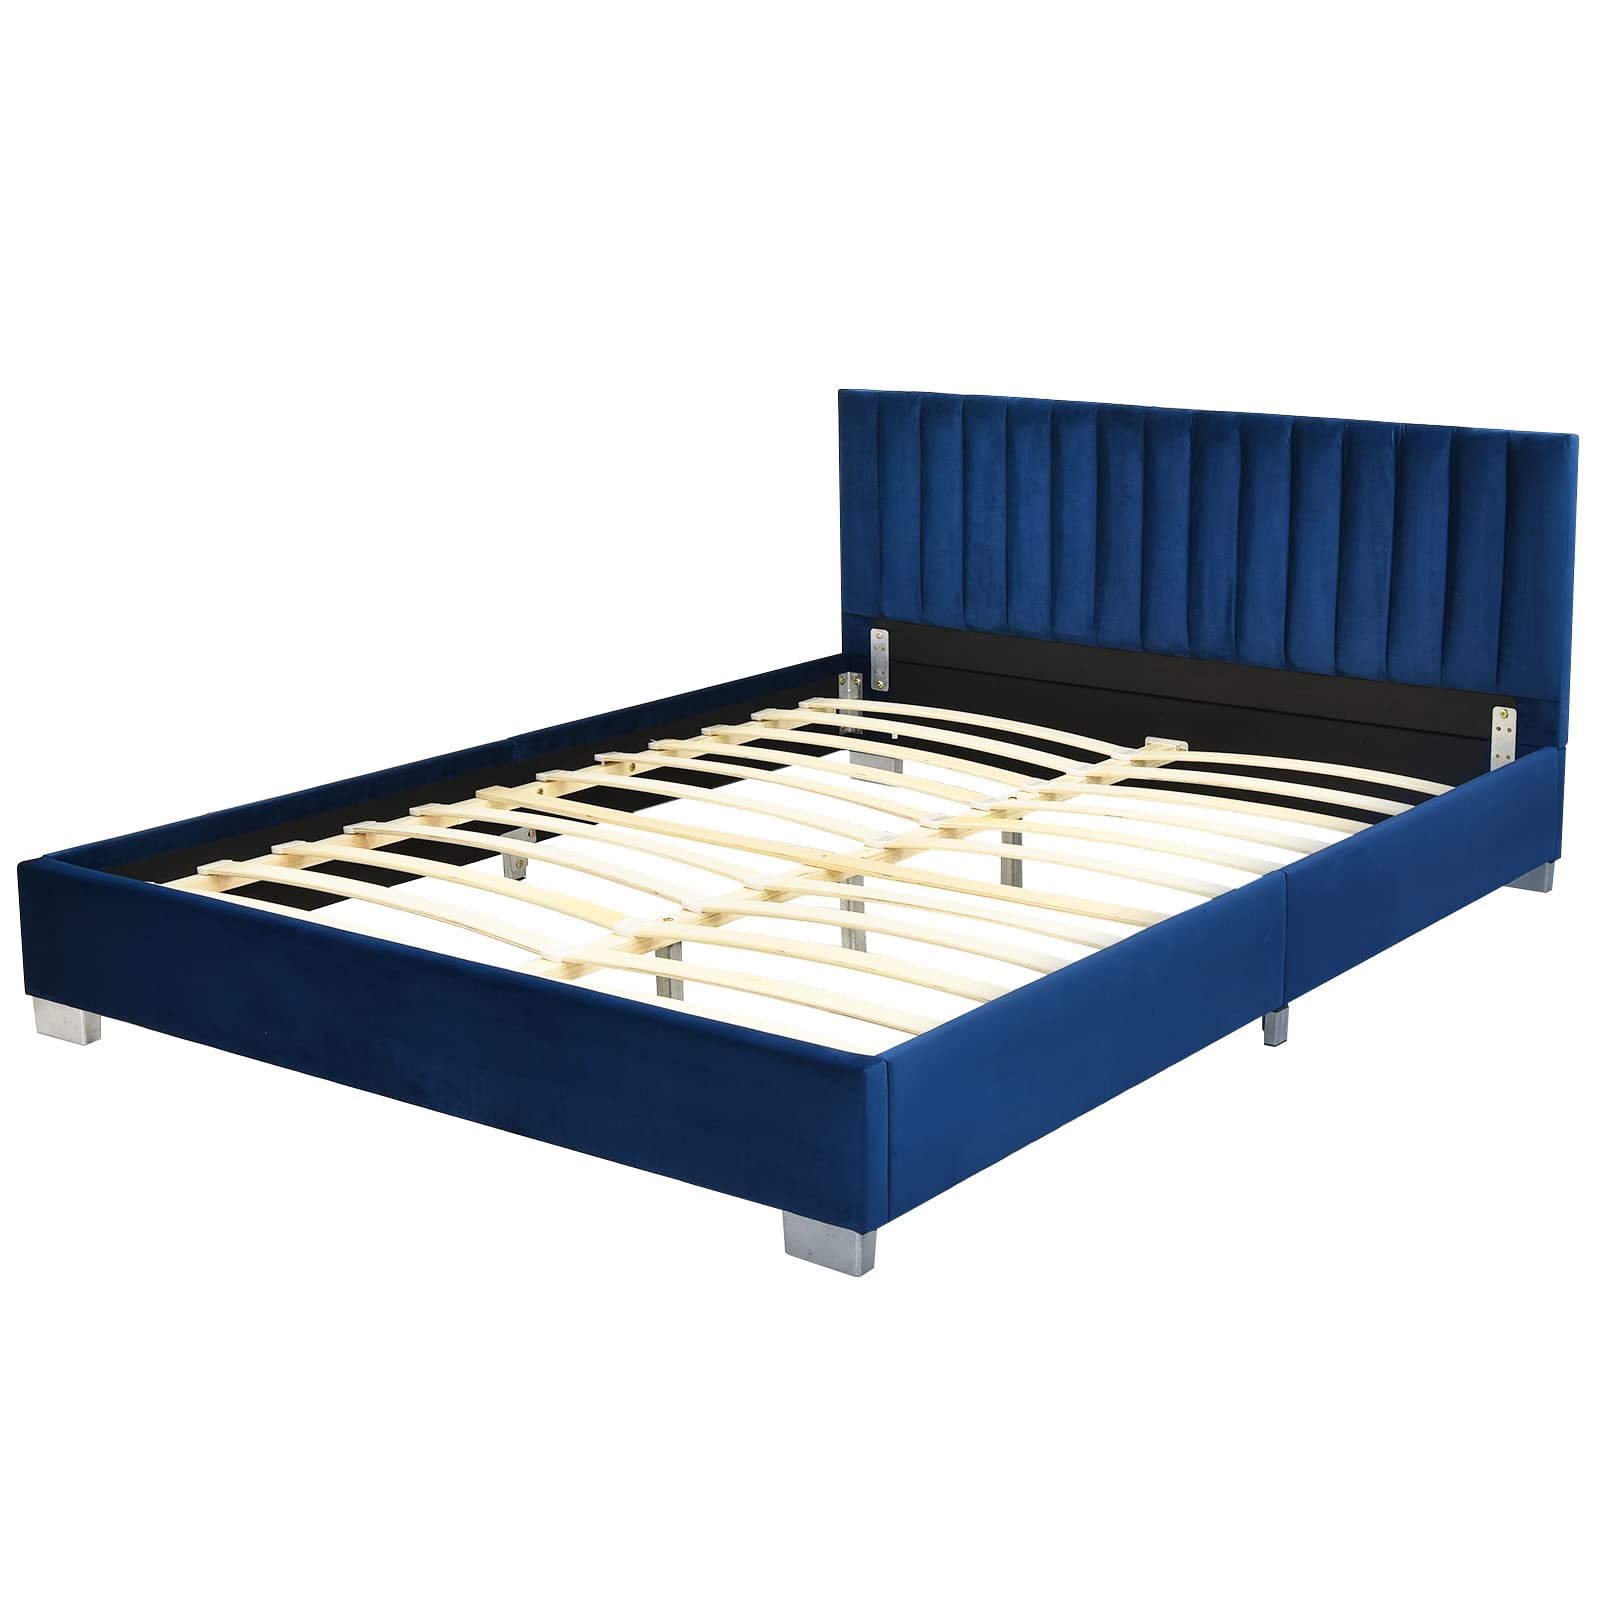 Giantex Upholstered Bed Frame, Full/Queen Size Modern Platform Bed